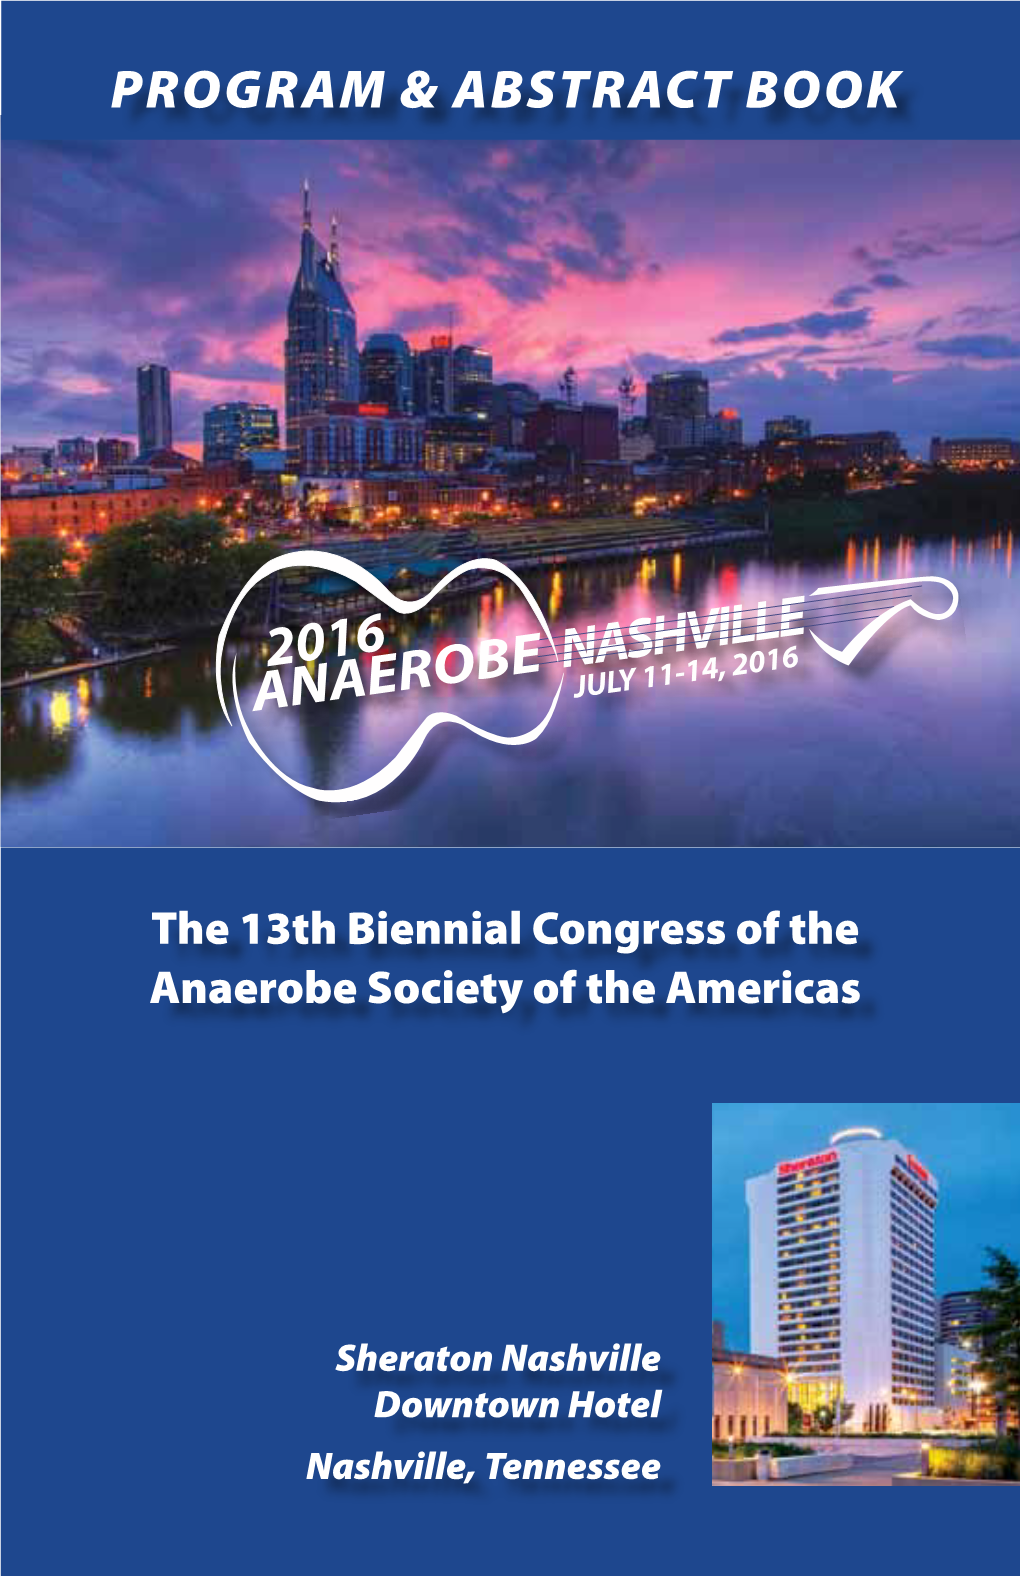 Anaerobe 2016, the 13Th Biennial Congress of the Anaerobe 2016 NASHVILLE Nashville, TN, USA Society of the Americas (ASA)